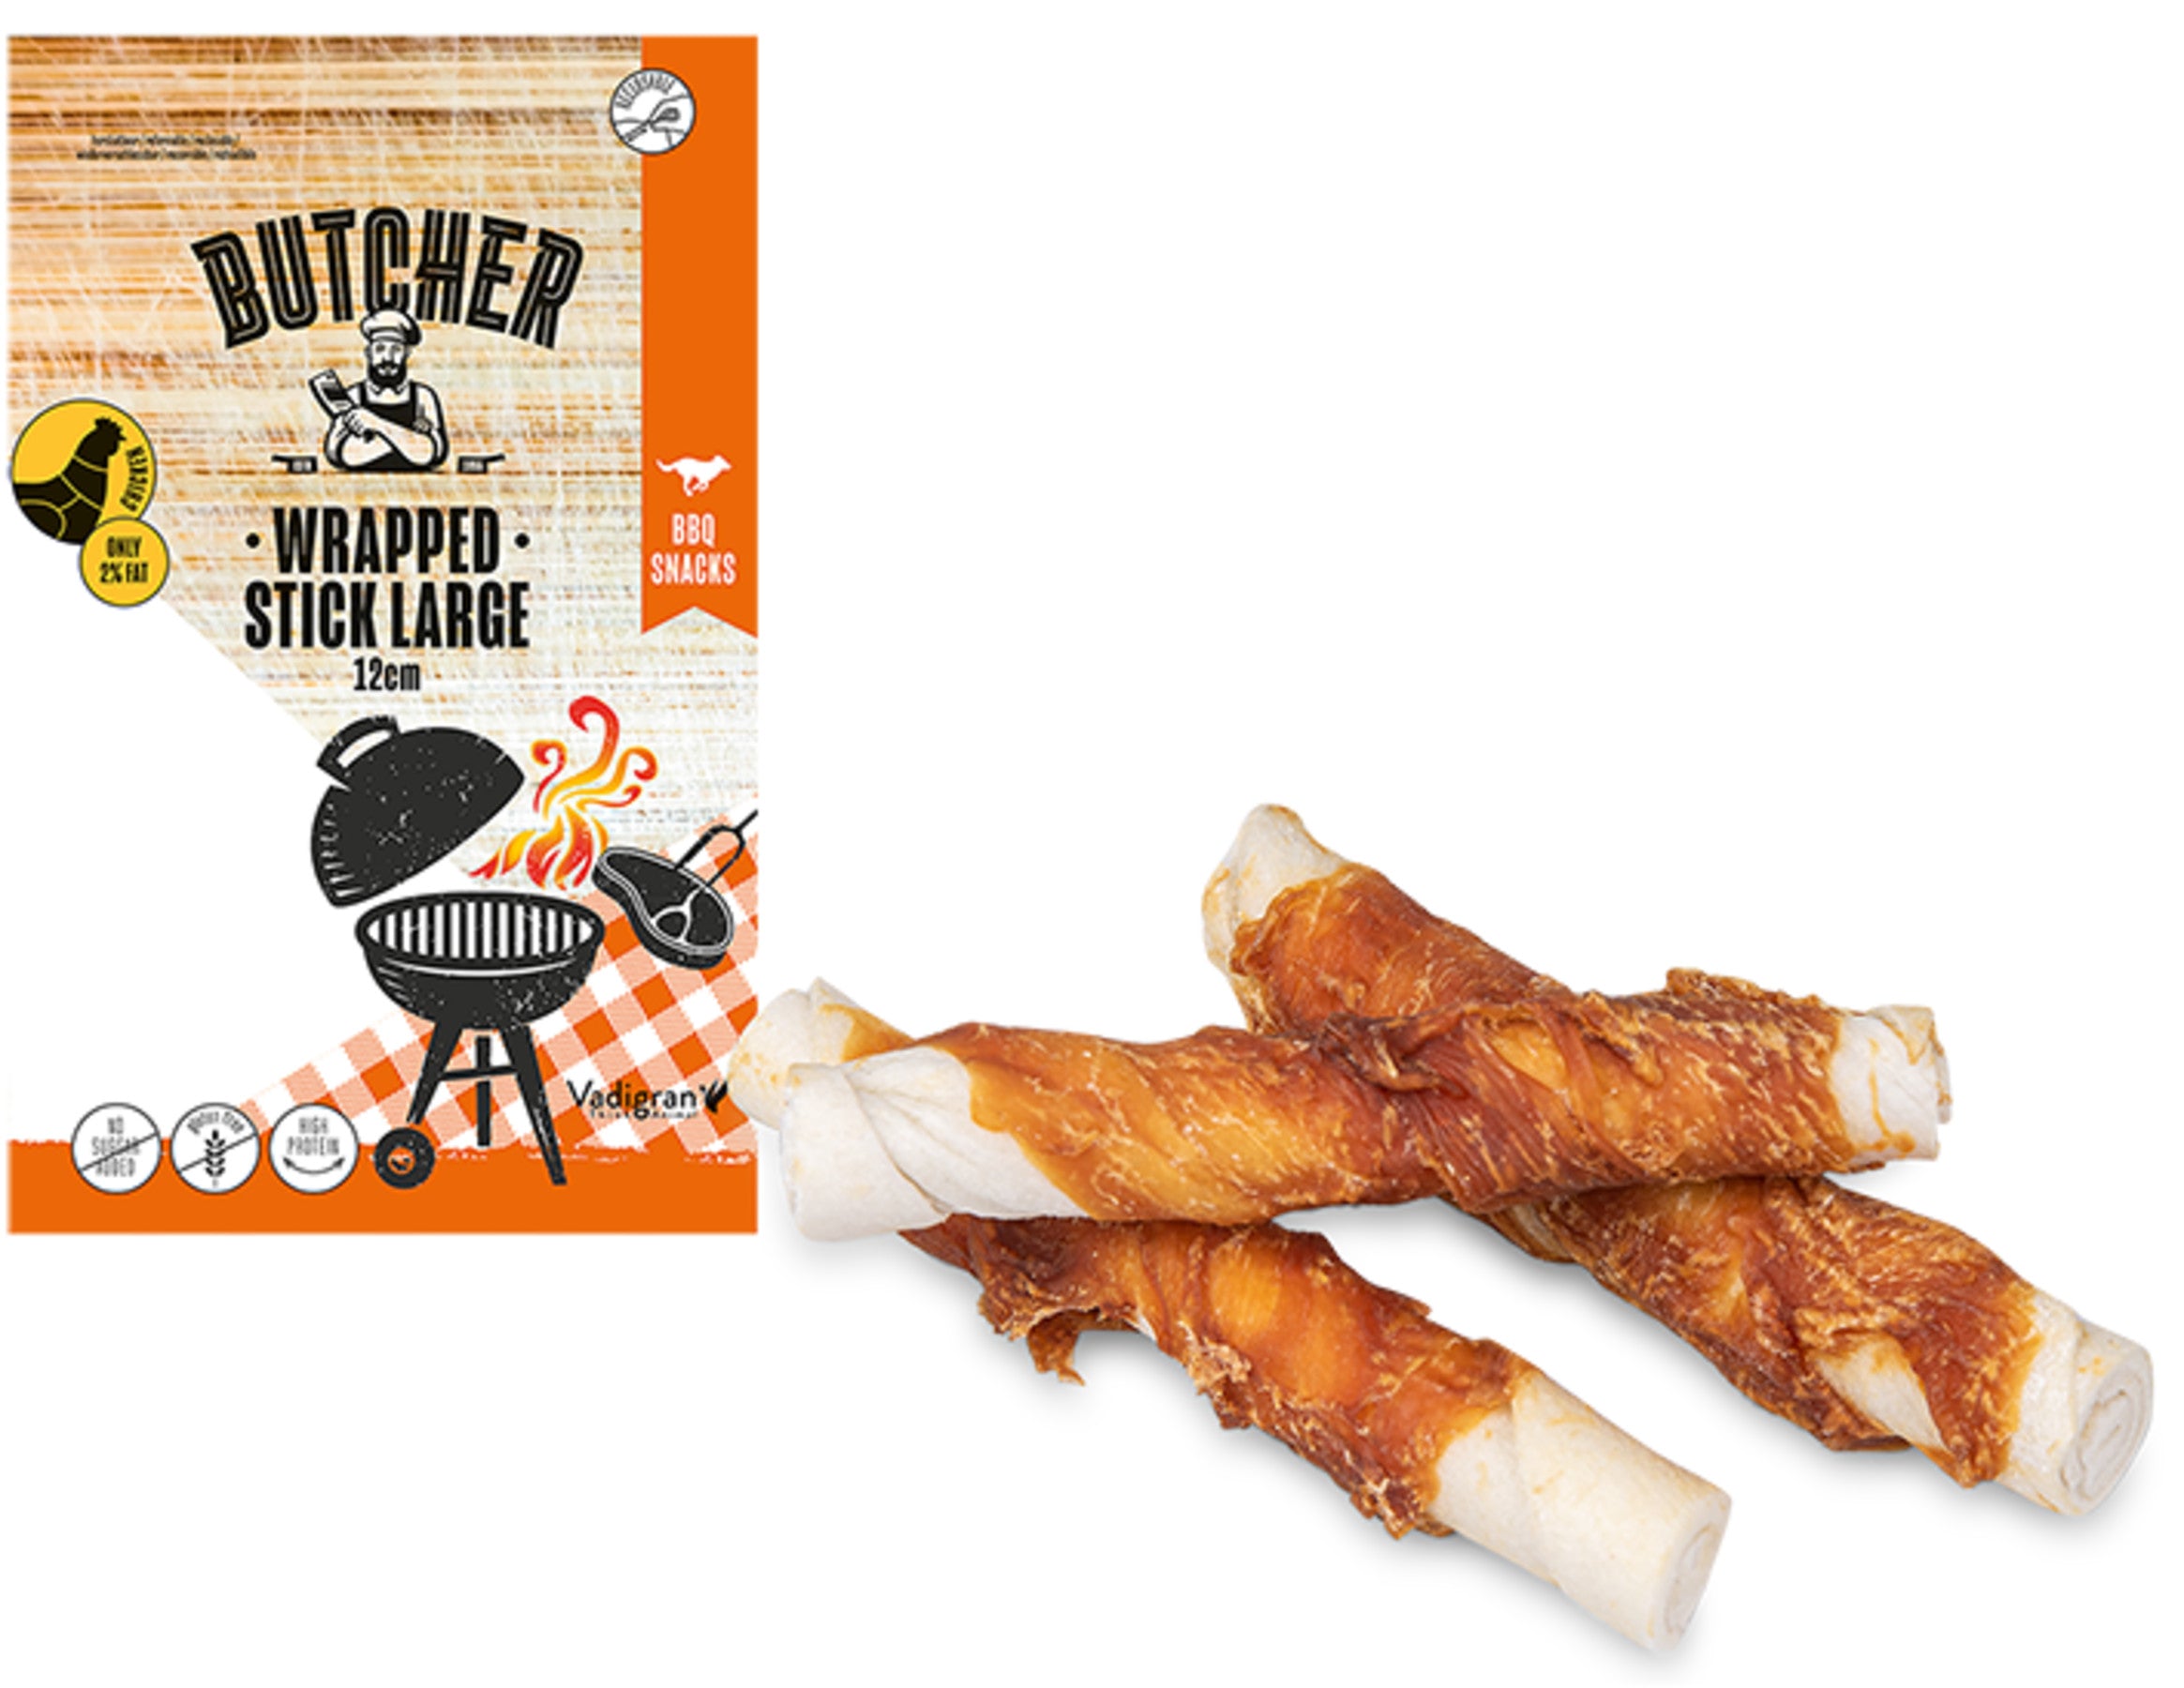 Chicken Wrapped Stick 12cm LARGE - Pip & Pepper by Dierenspeciaalzaak Huysmans